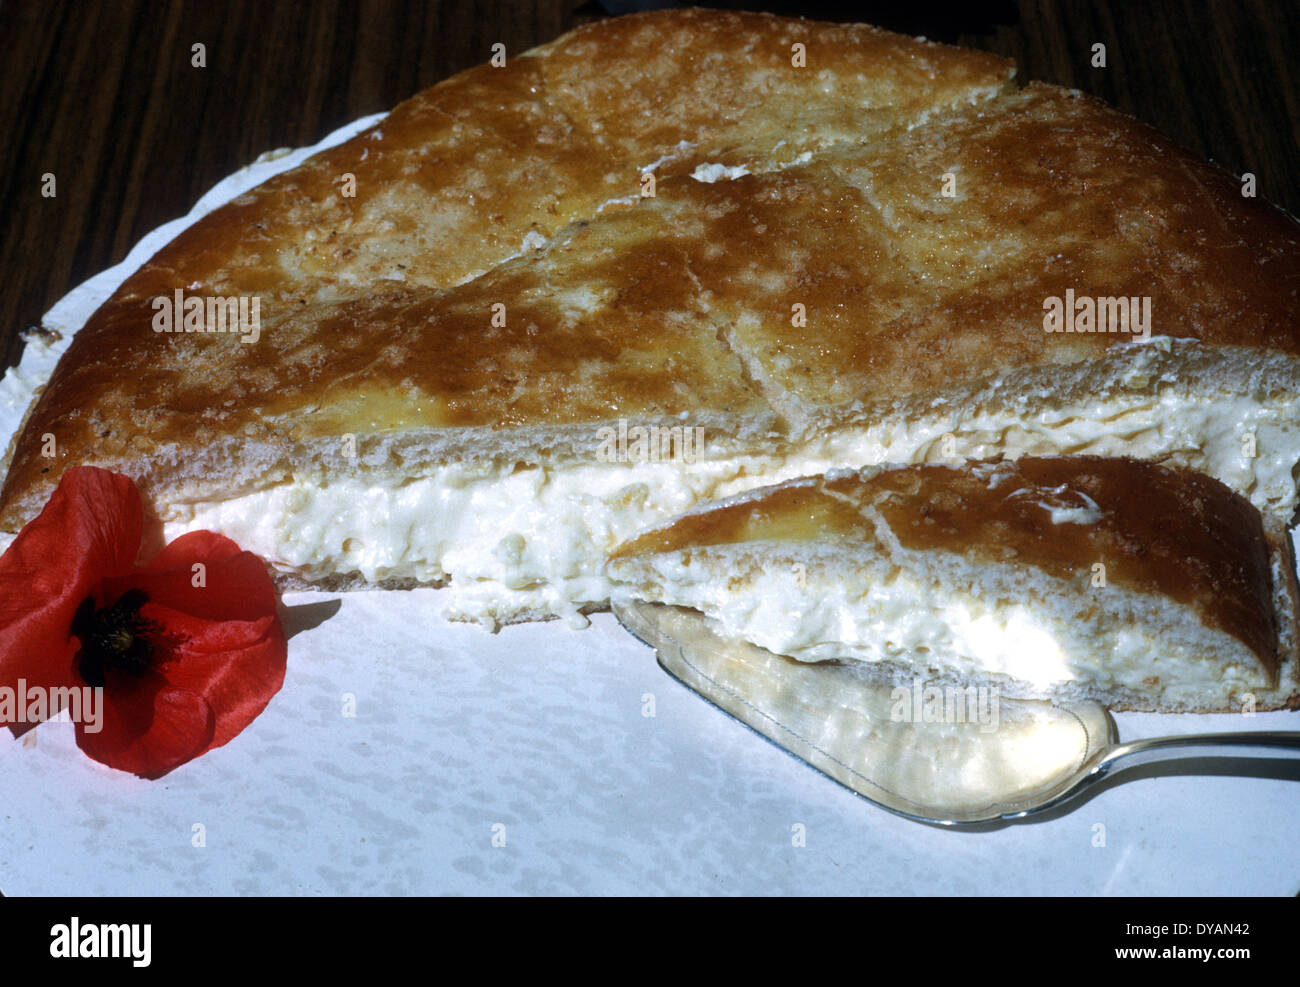 Un pastel de St Tropez, un brioche en capas relleno de crema de mantequilla, St Tropez, sur de Francia Foto de stock